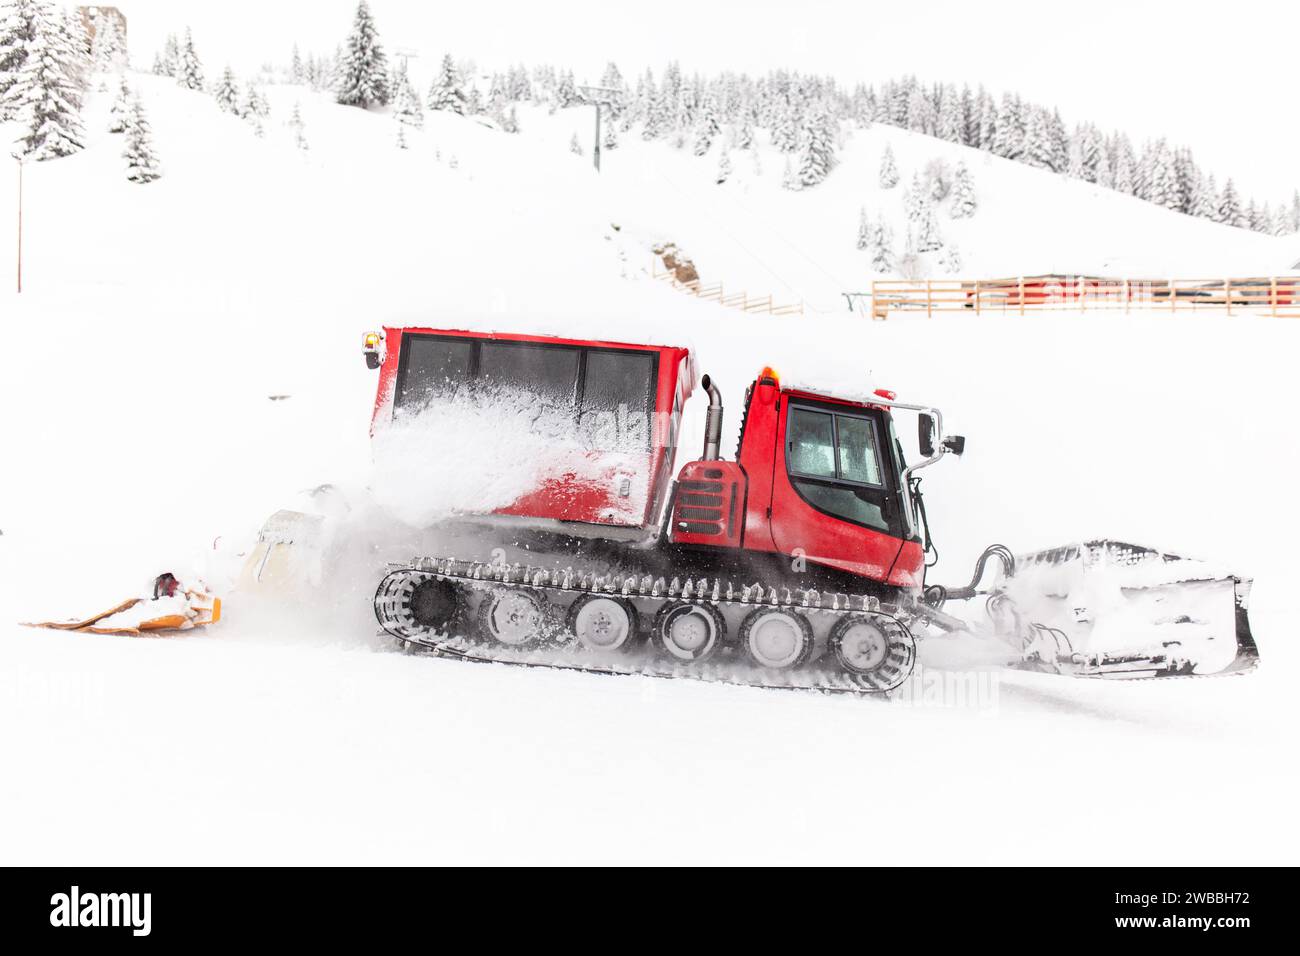 Red snowcat vehicle preparing ski slopes. Stock Photo